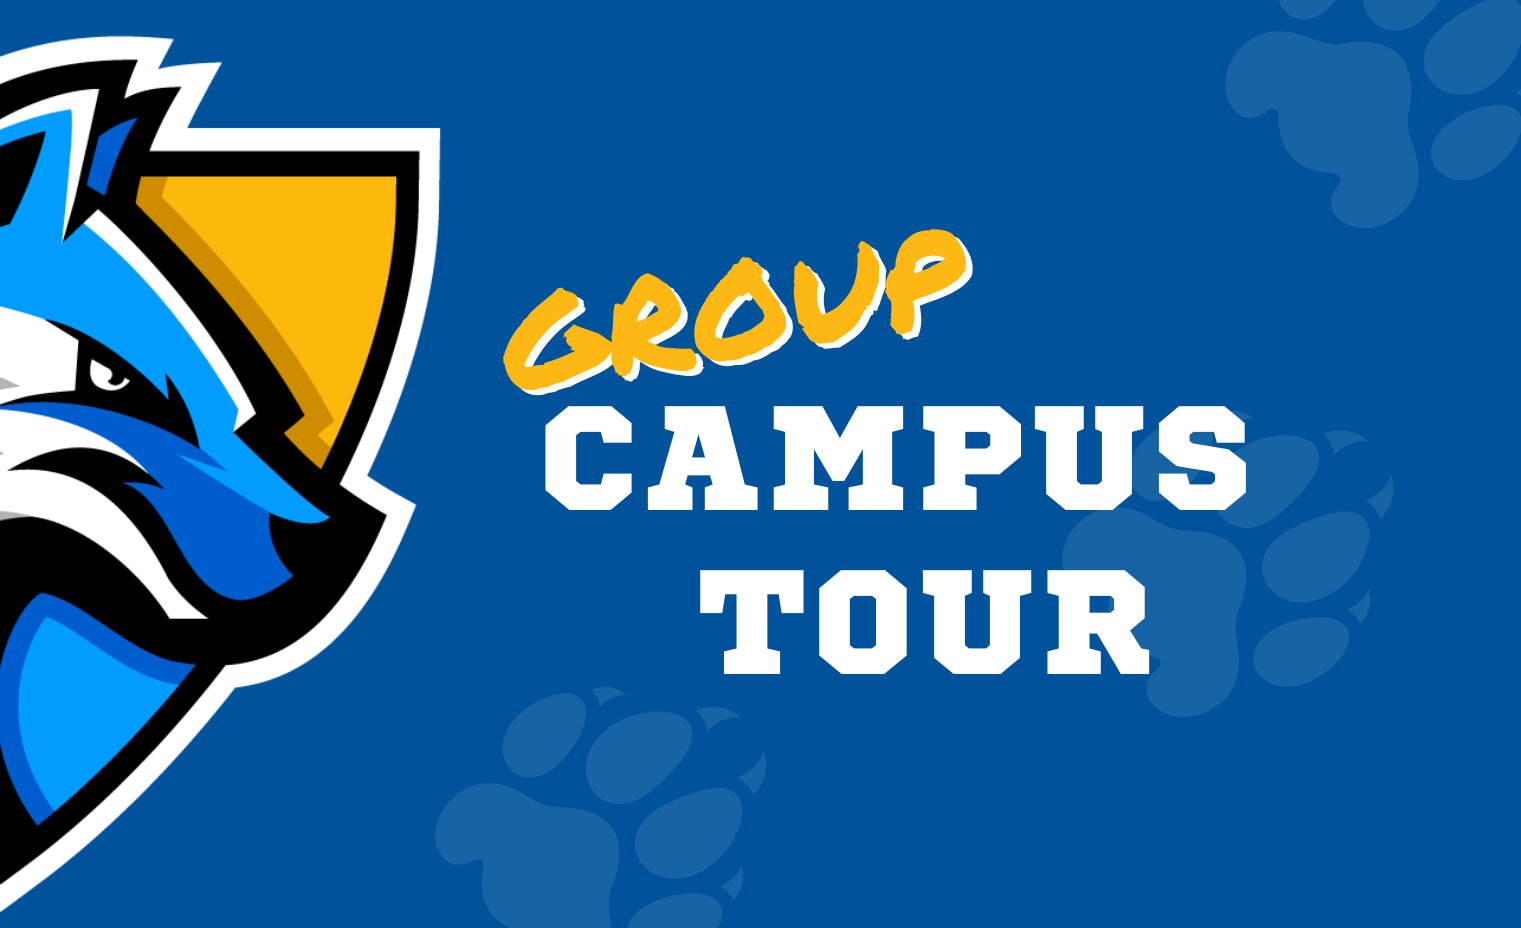 Group Campus Tour graphic